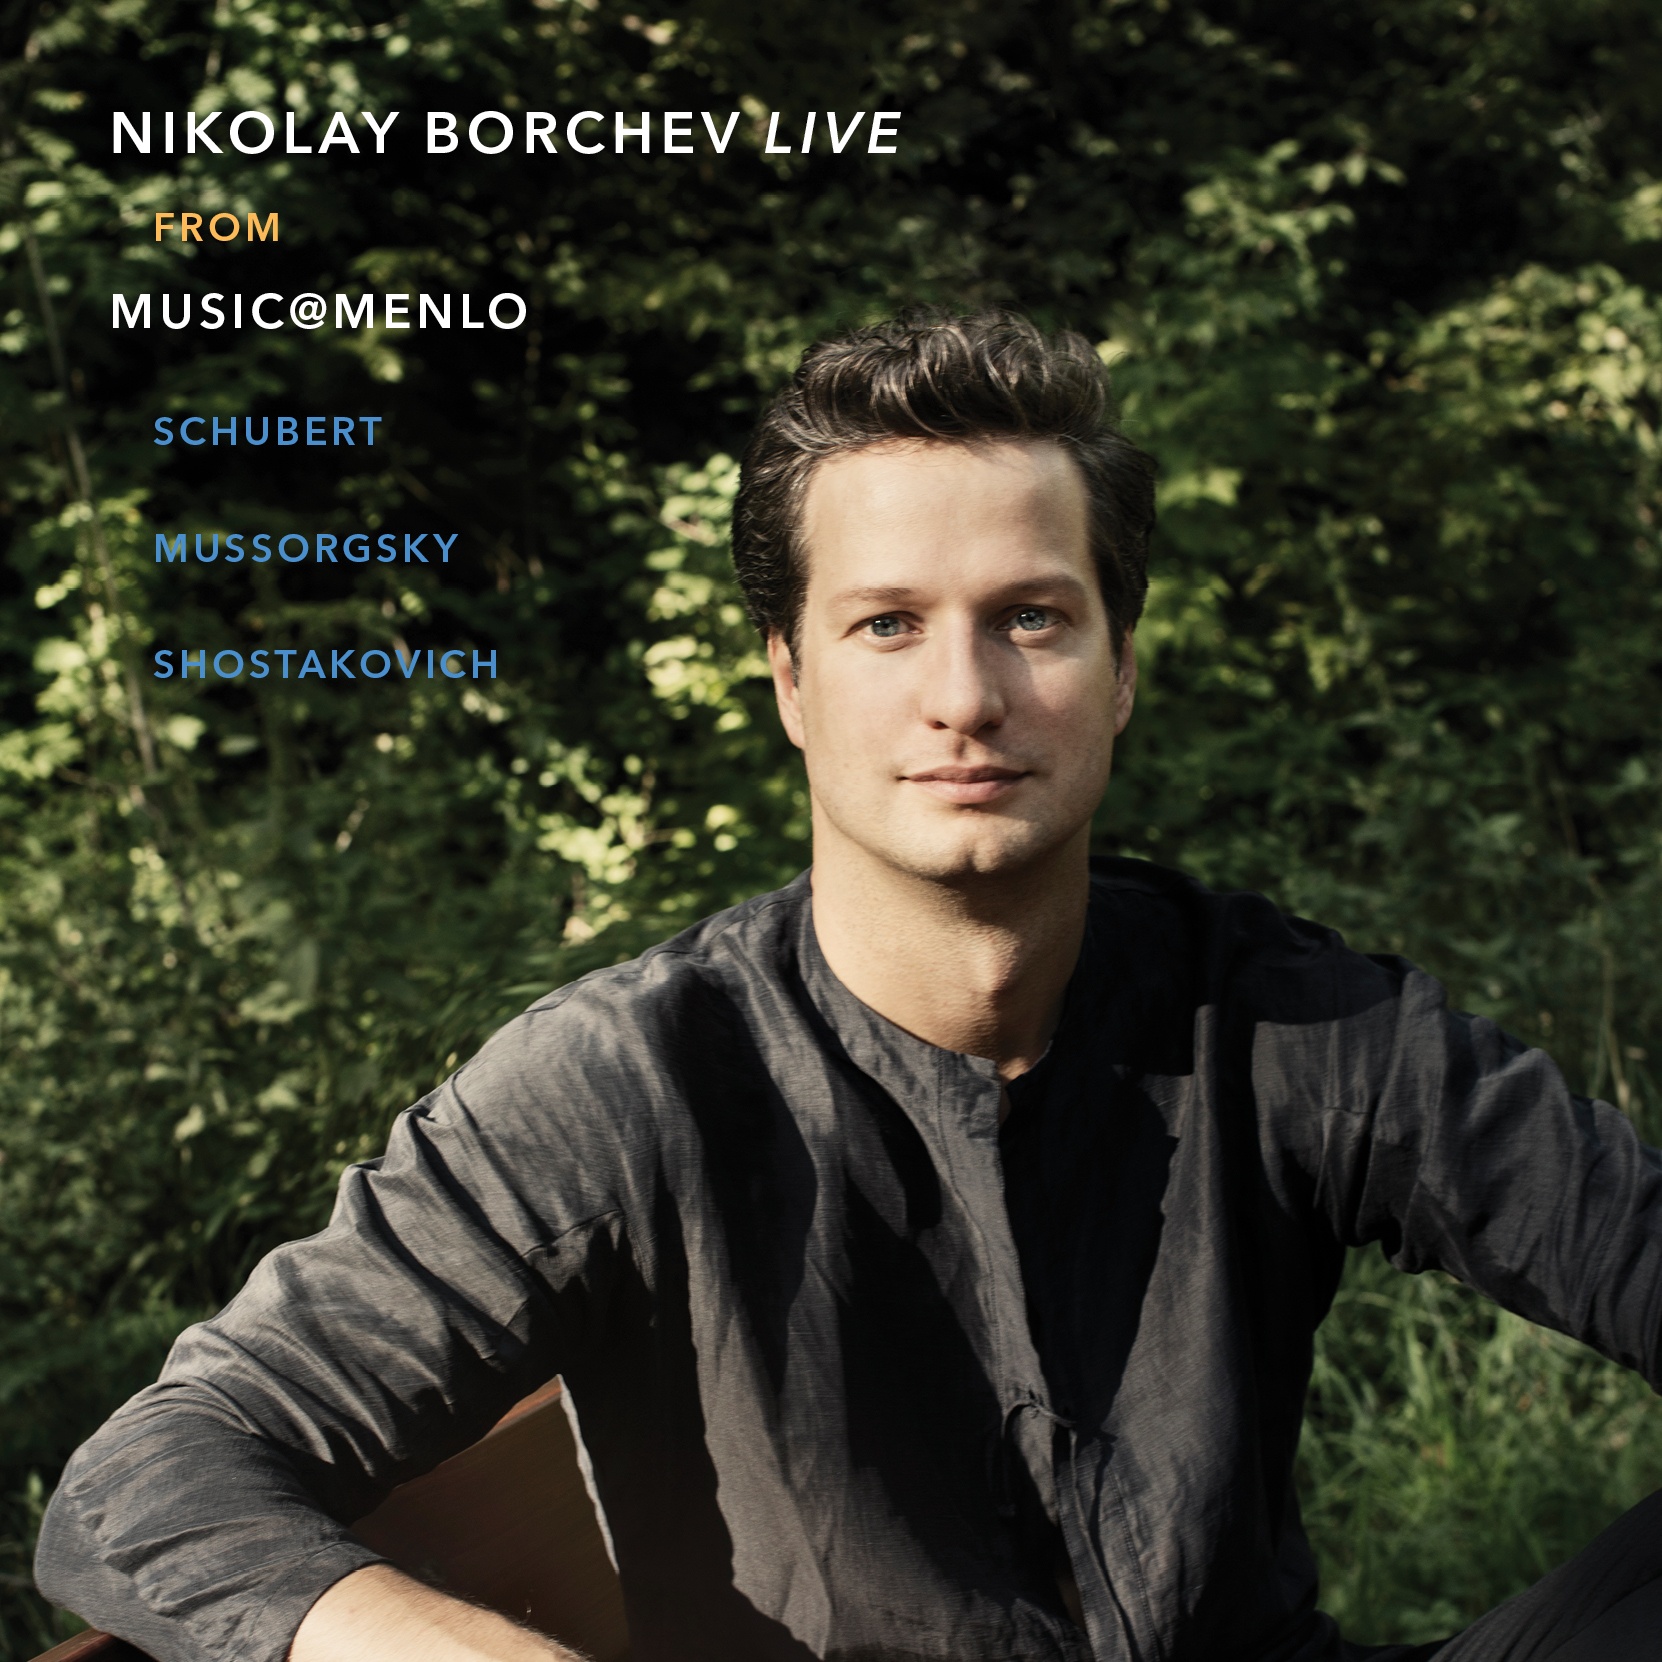 Nikolay Borchev LIVE